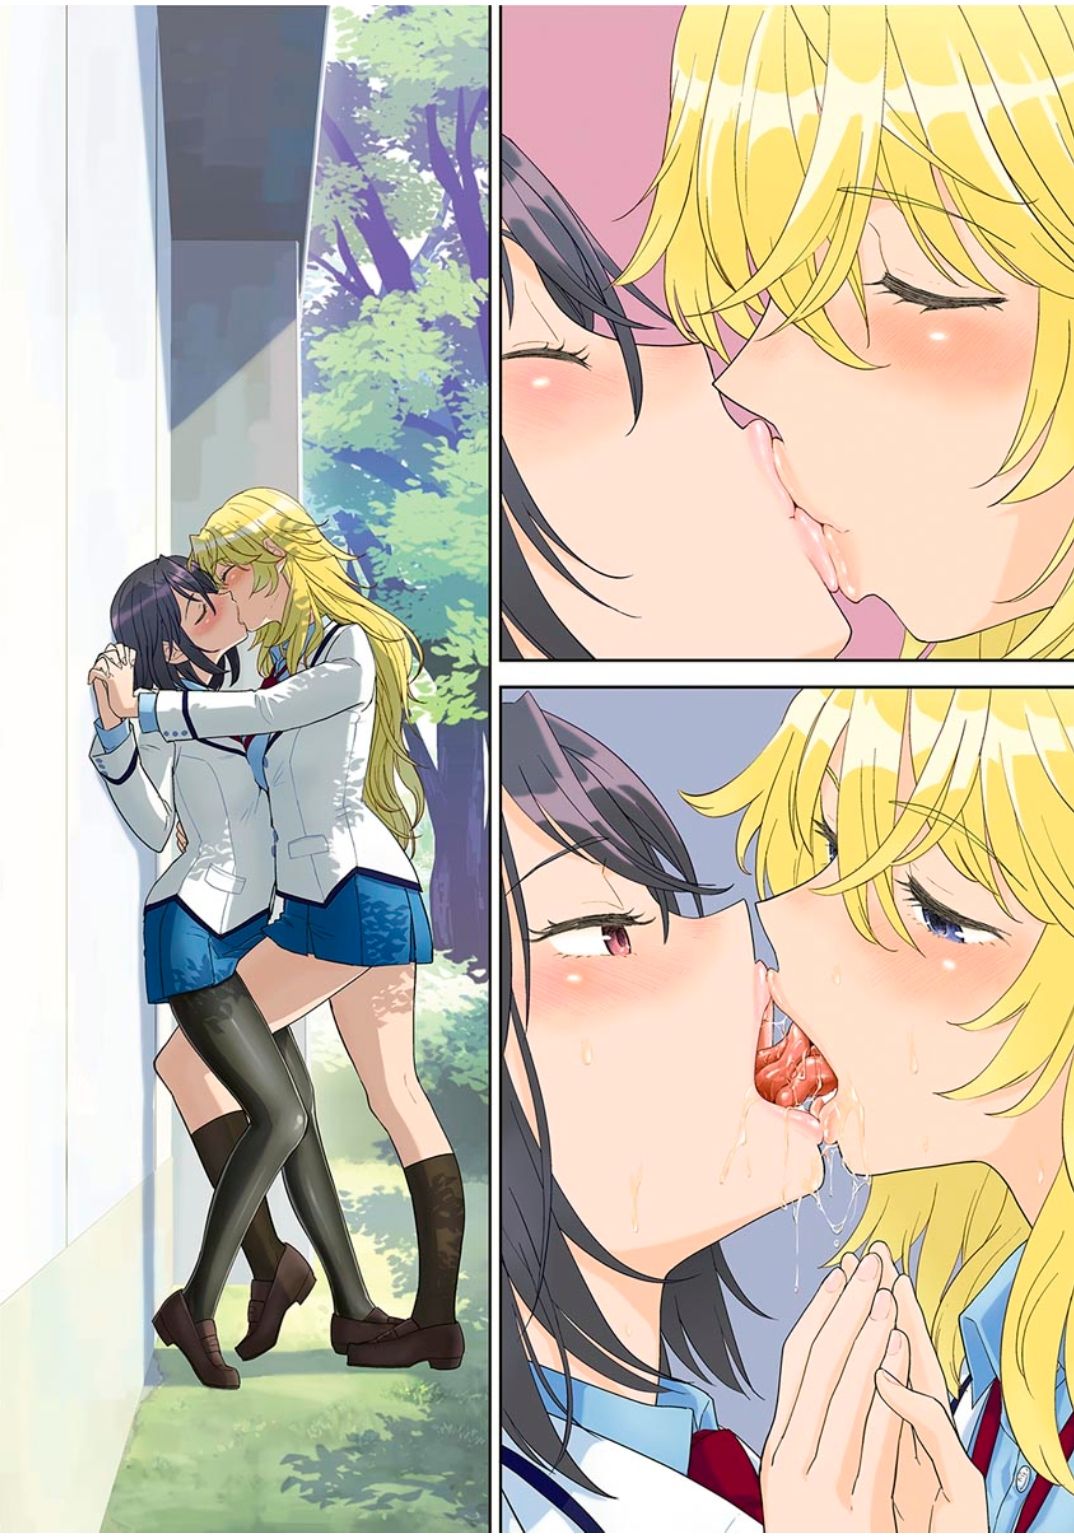 Yuri kissing porn comic